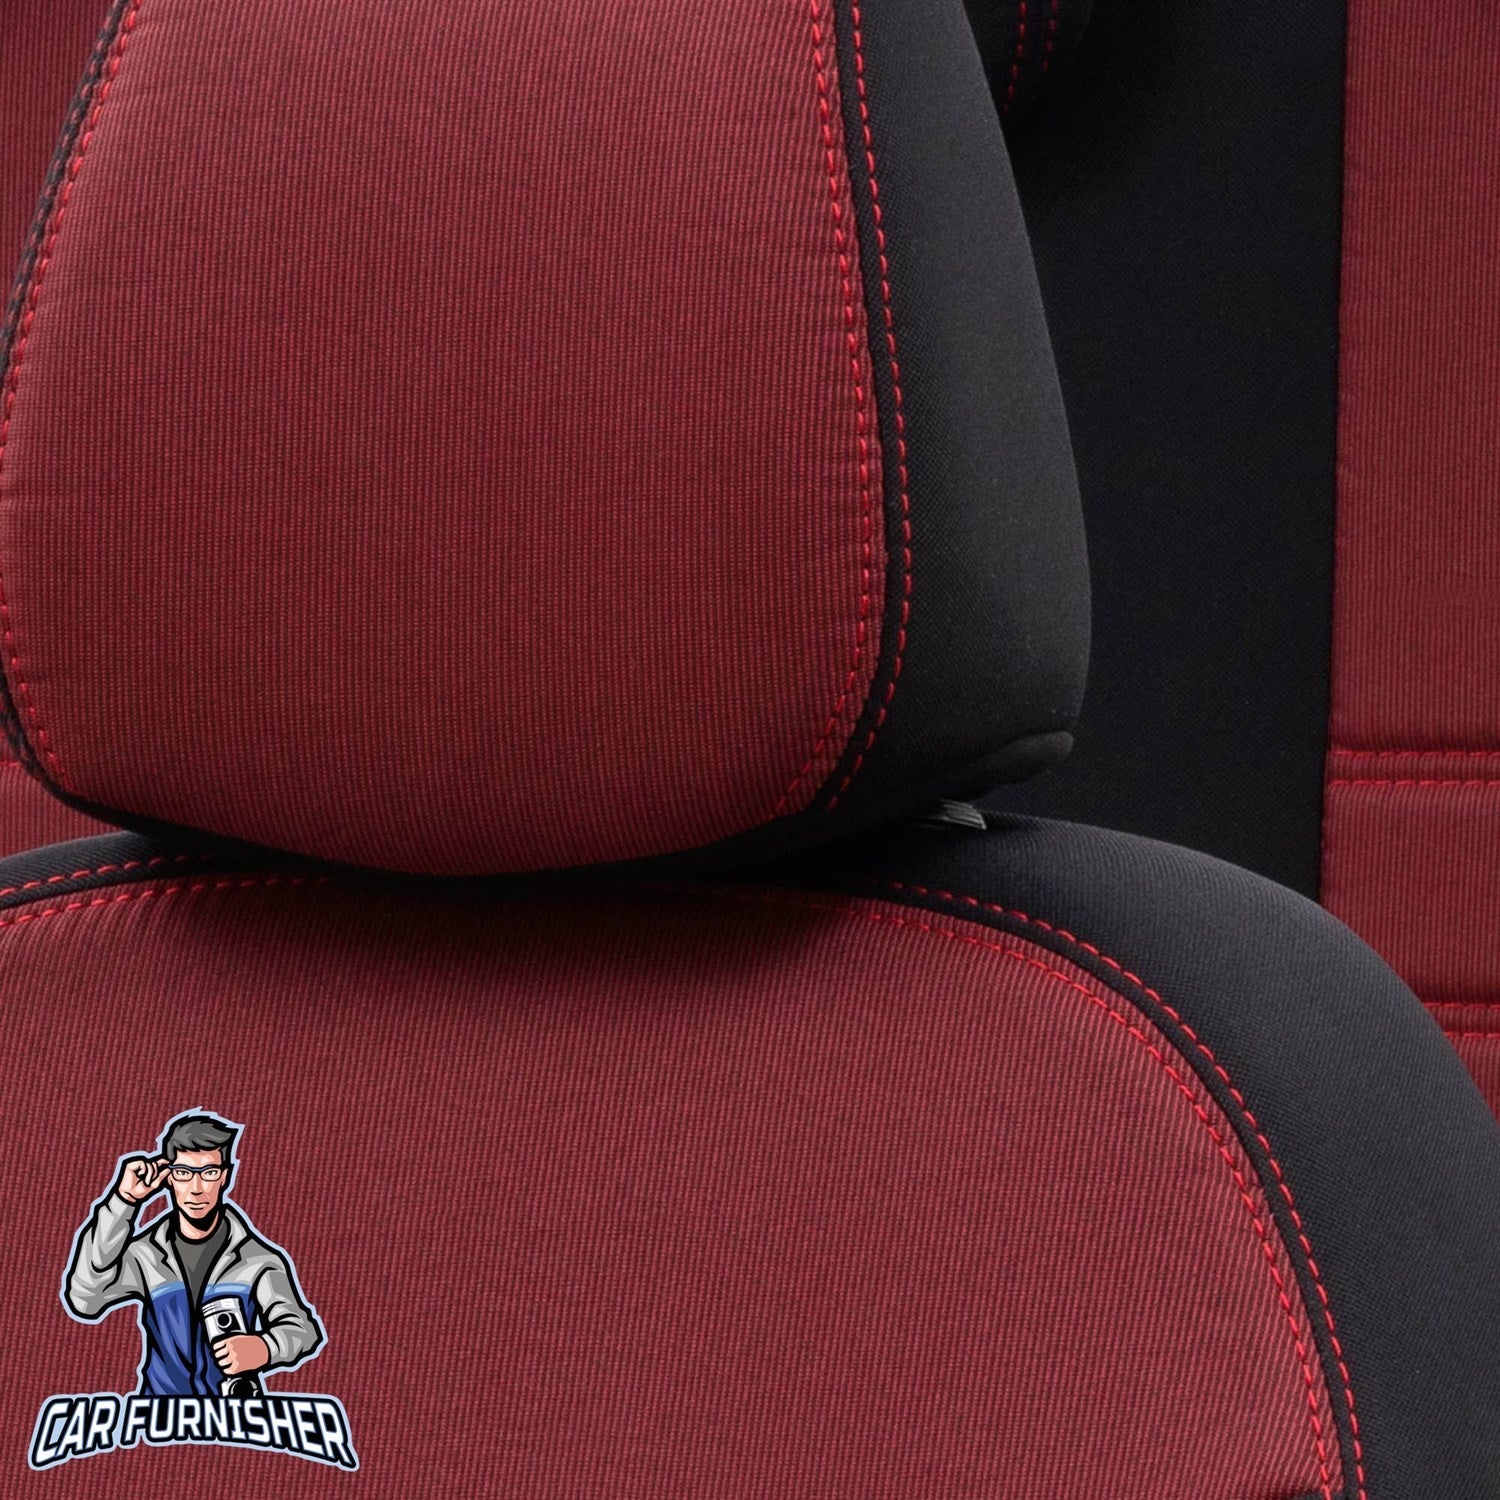 Toyota Yaris Seat Cover Original Jacquard Design Red Jacquard Fabric